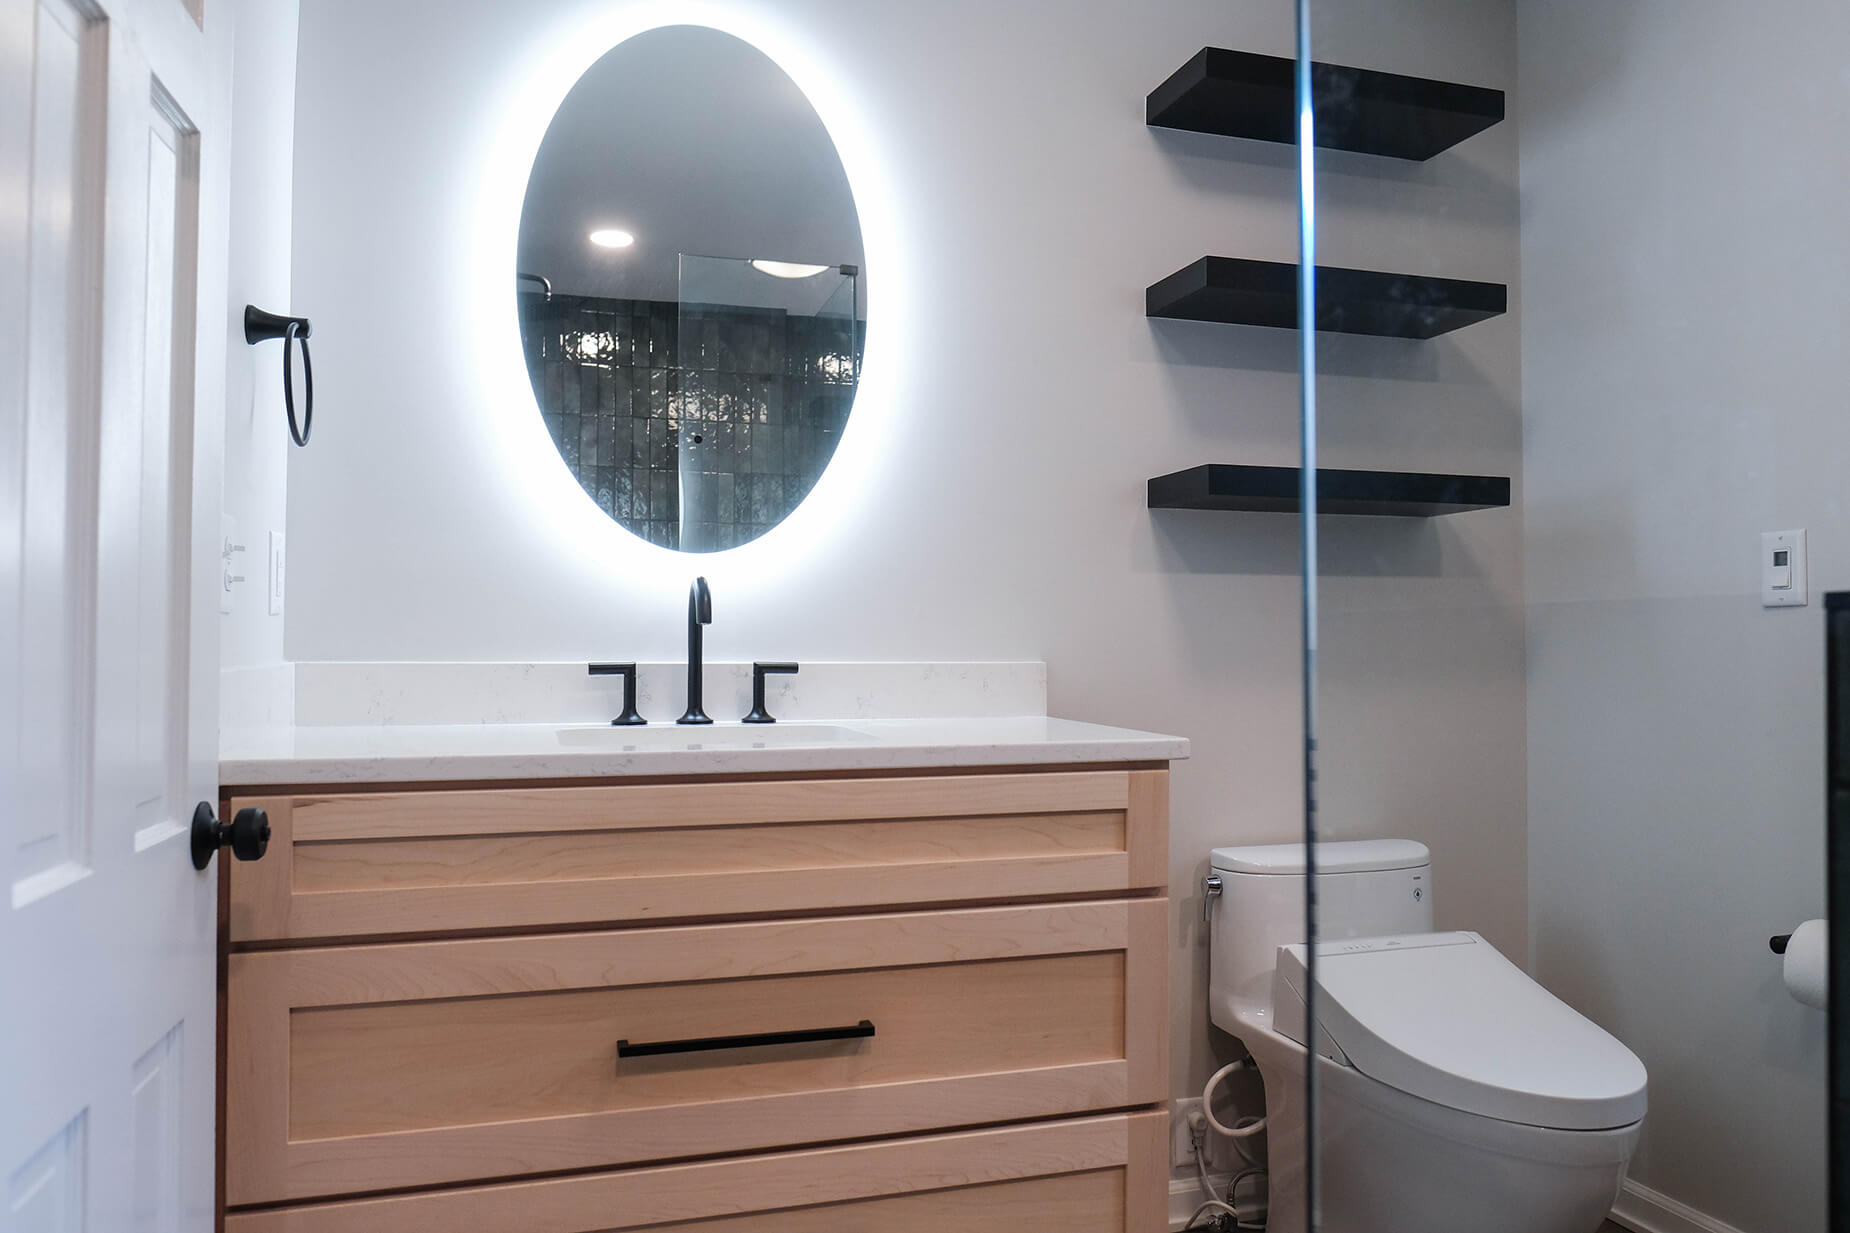 Oval bathroom mirror with backlight